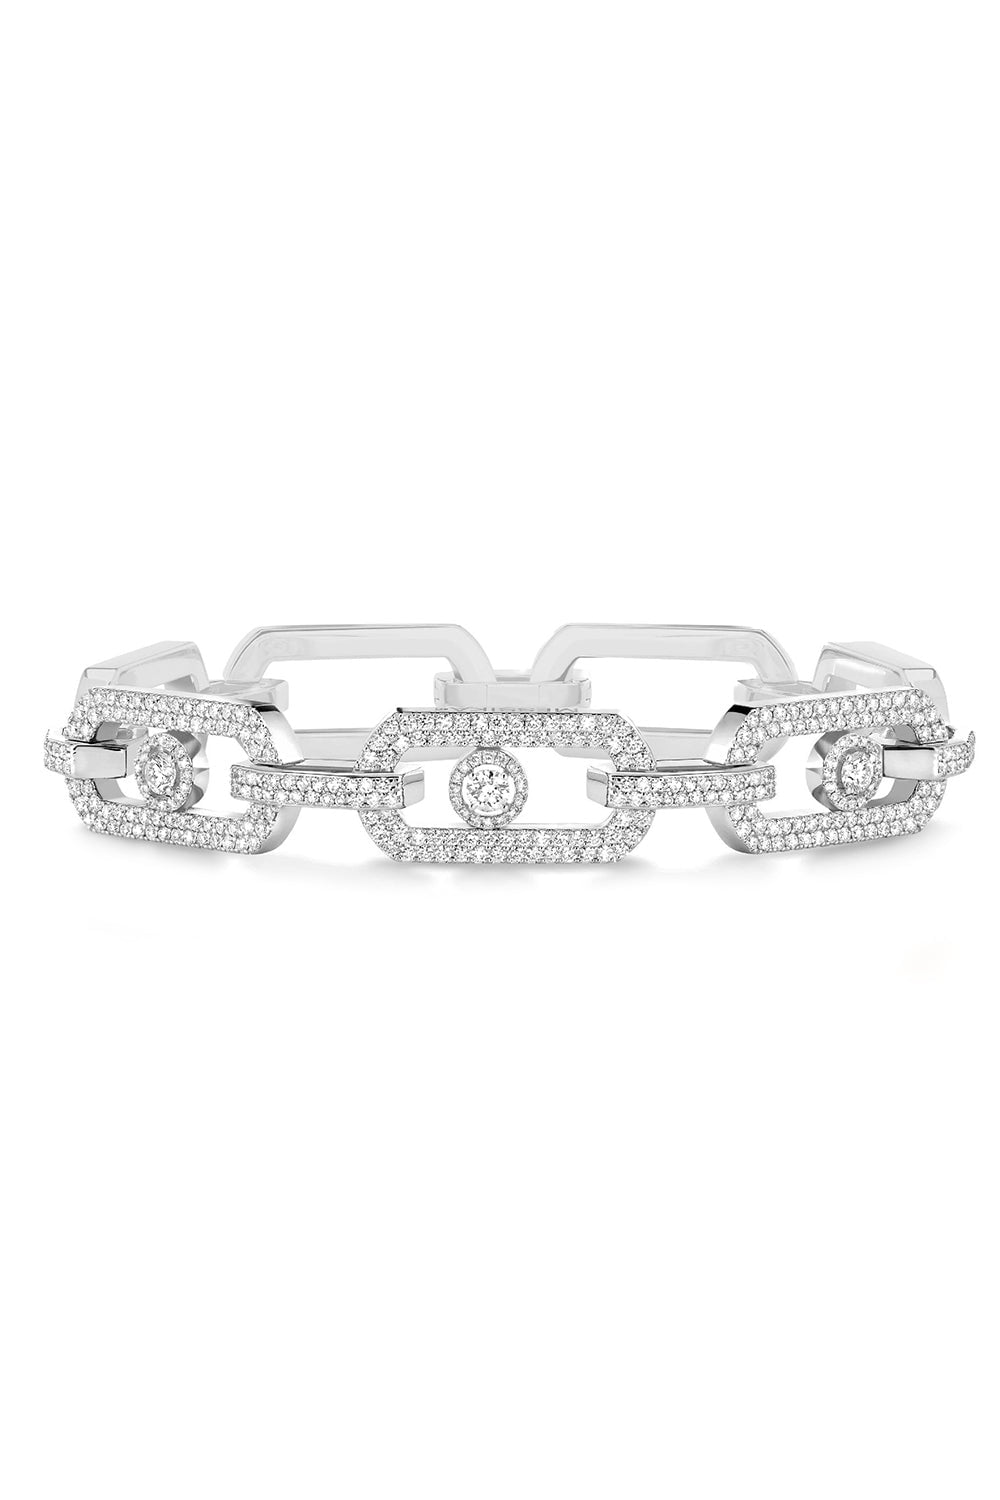 MESSIKA-So Move XL Pave Diamond Bracelet-WHITE GOLD